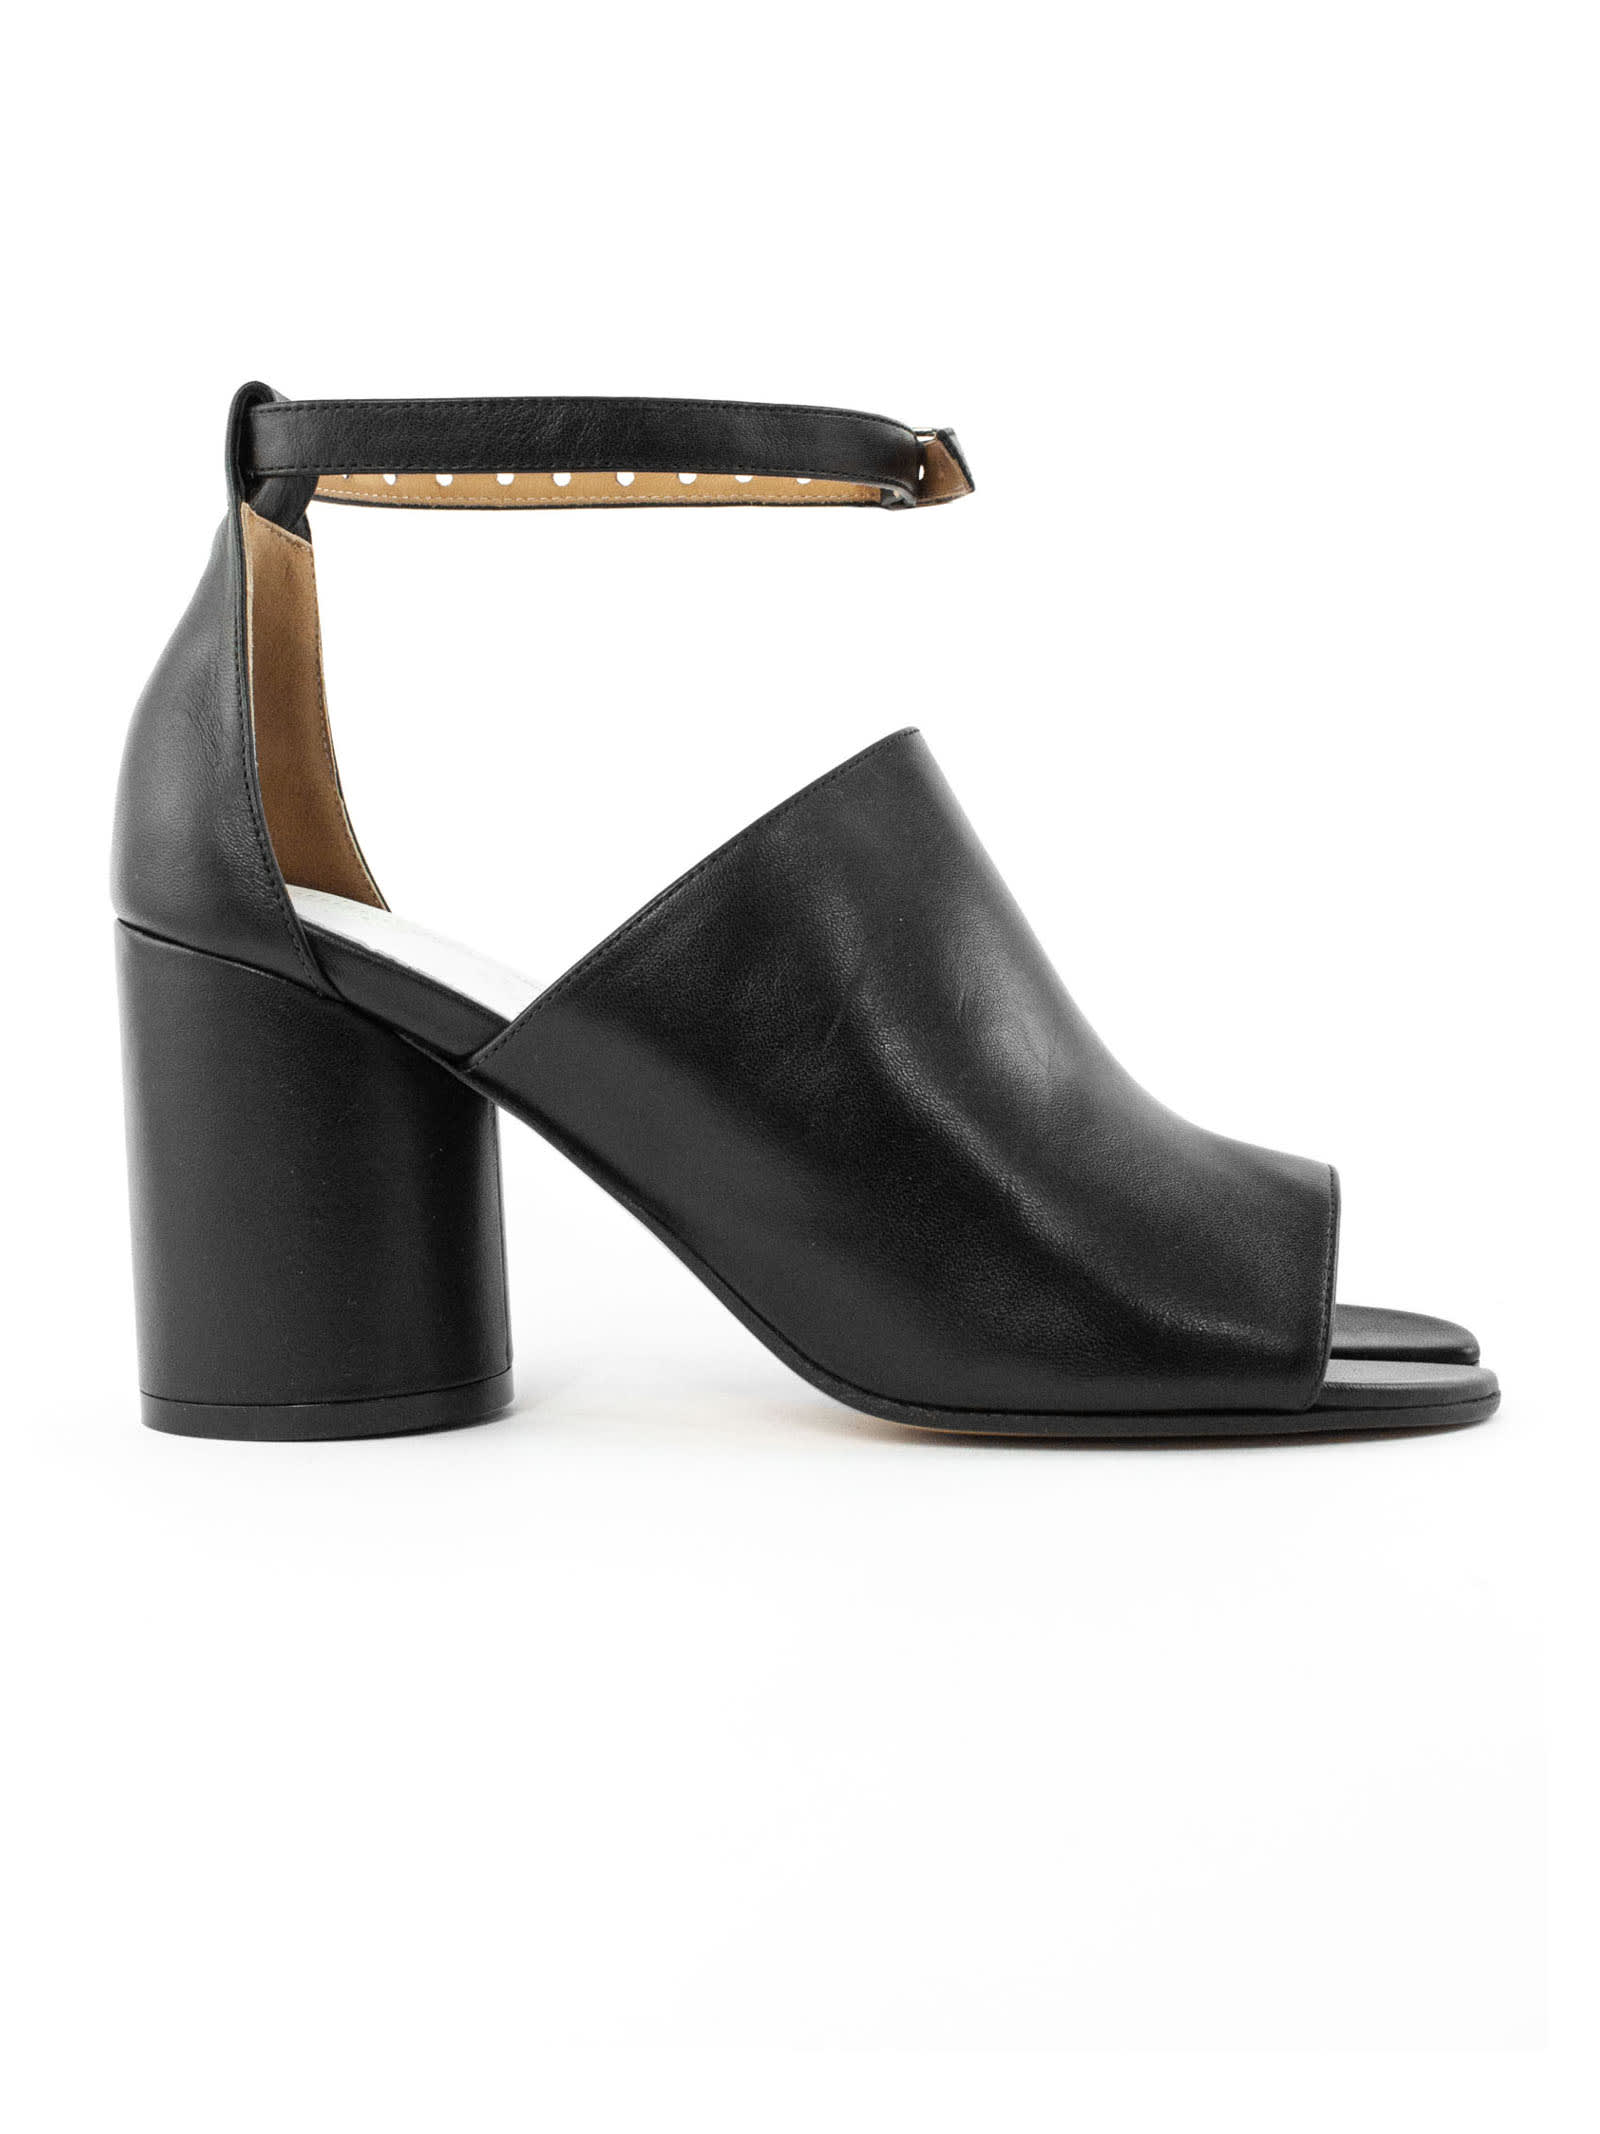 Buy Maison Margiela Black Leather Open Tabi Toe Sandals online, shop Maison Margiela shoes with free shipping